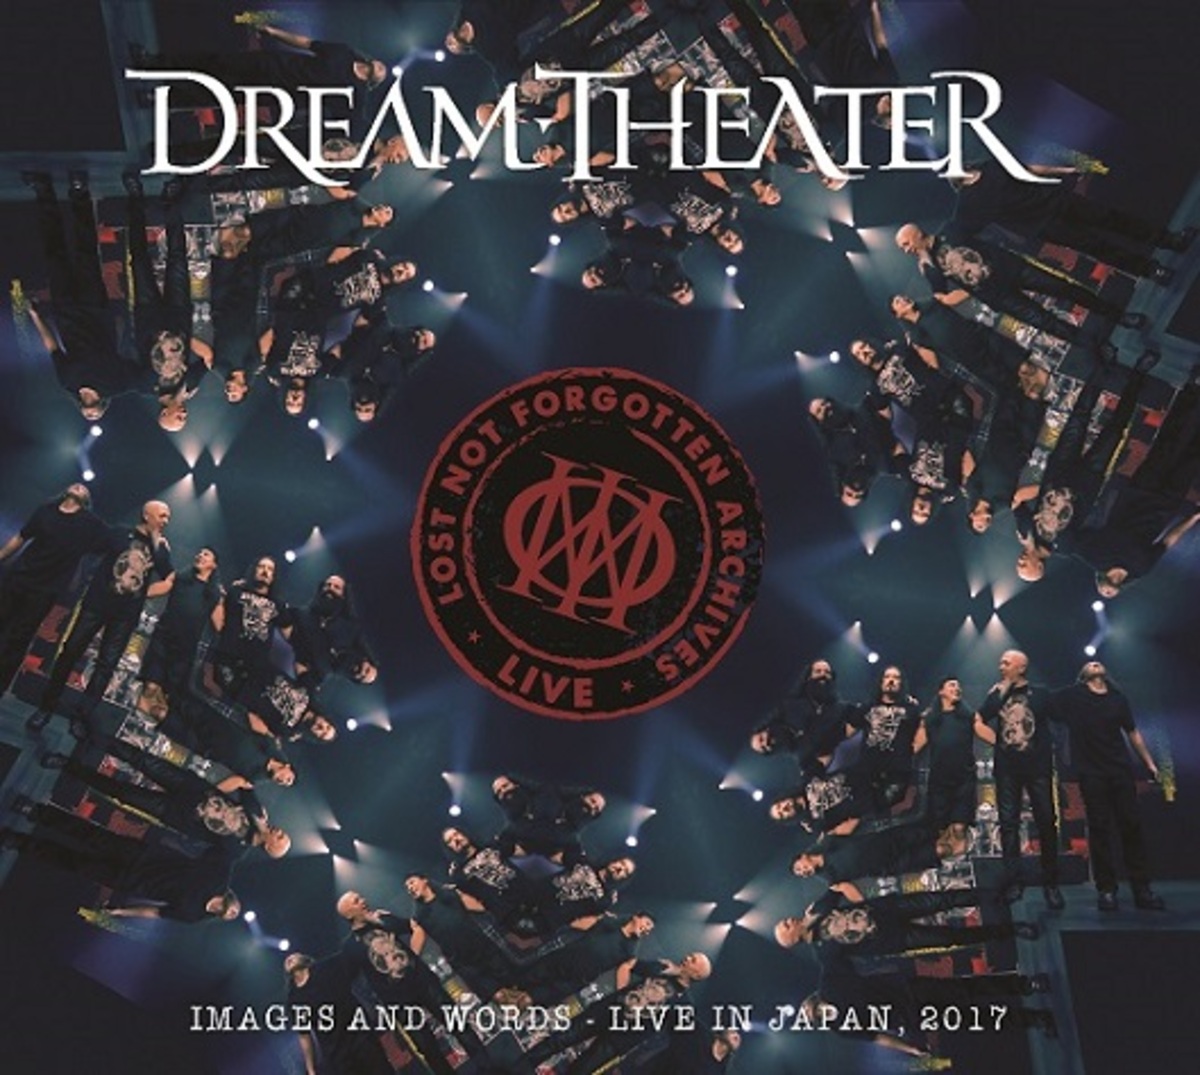 Movies & TV - The Dreamers - Japan DVD – CDs Vinyl Japan Store